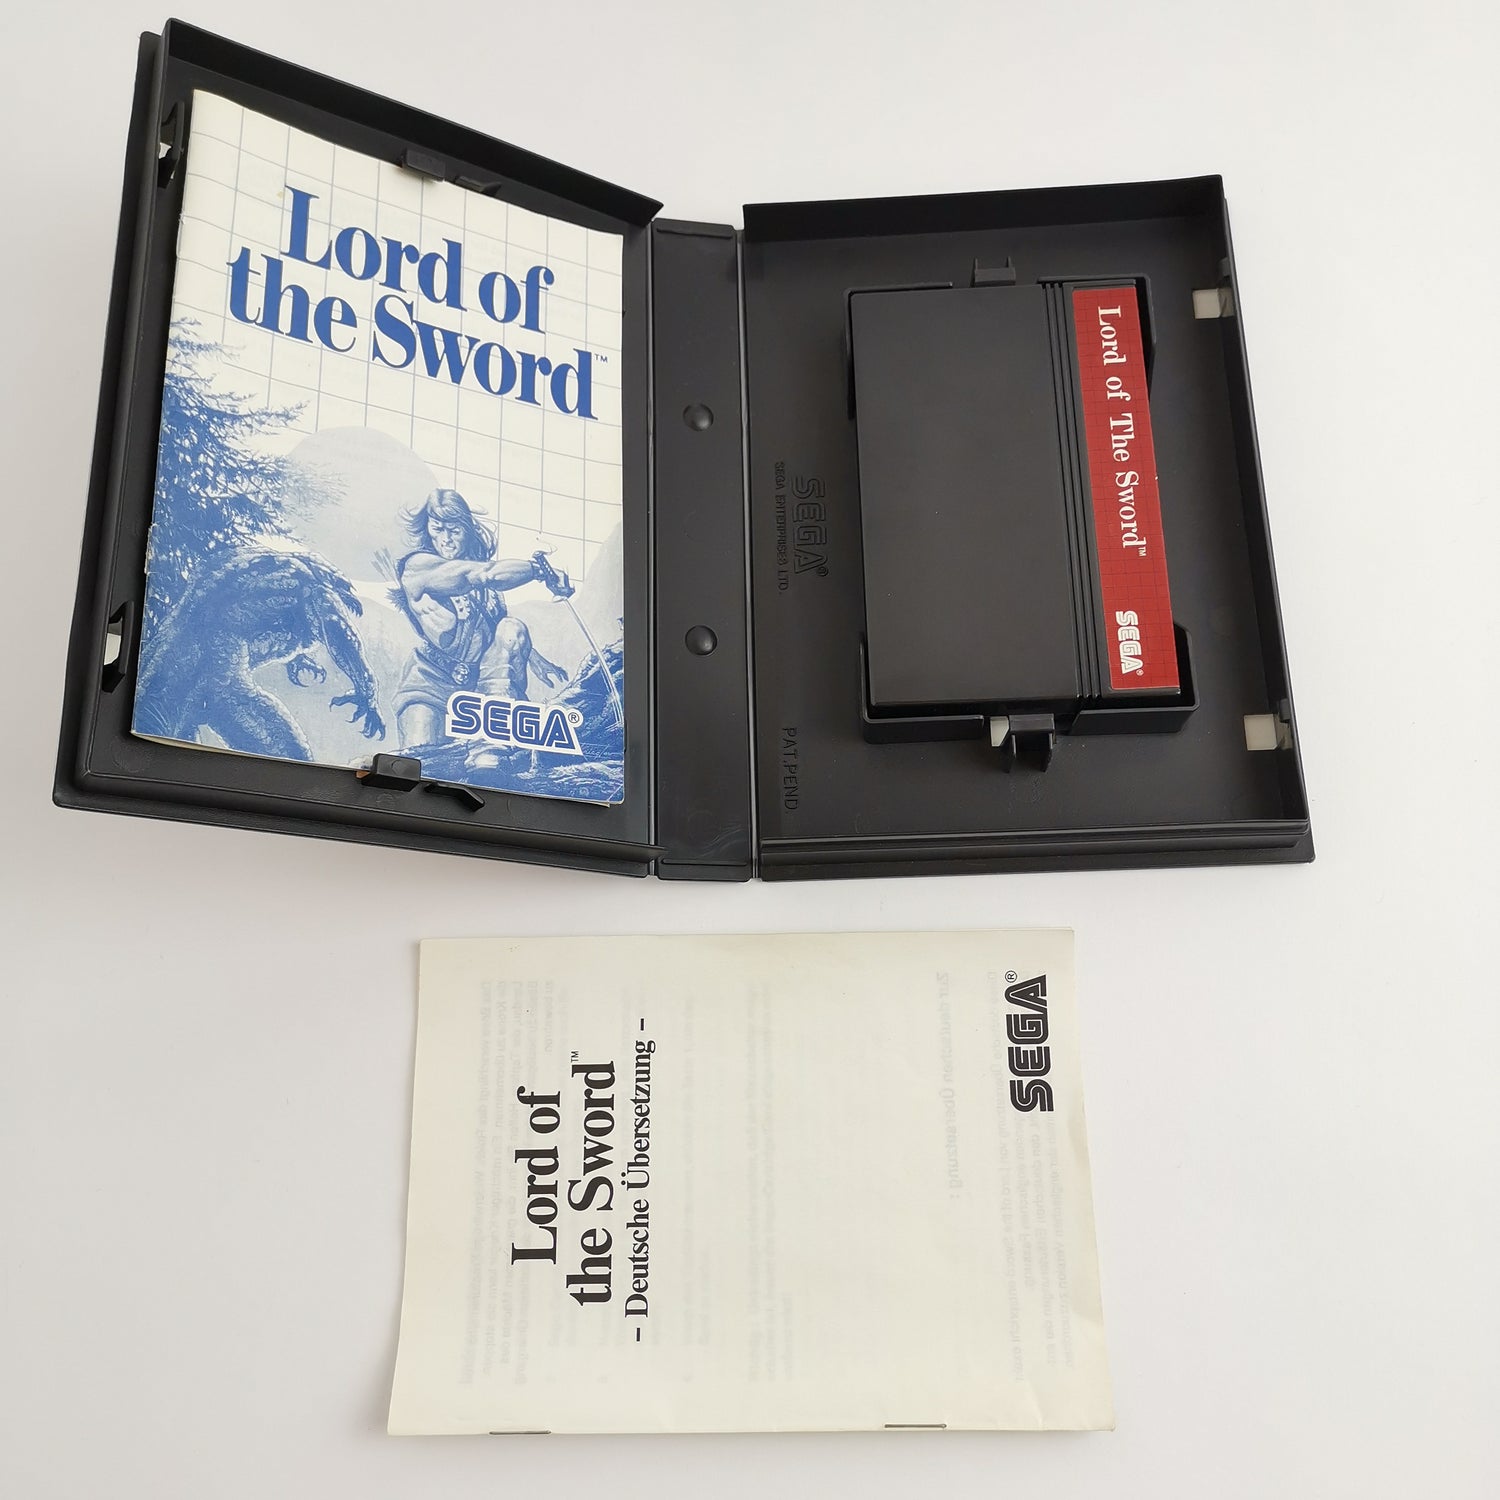 Sega Master System game: Lord of the Sword in original packaging | MS PAL version